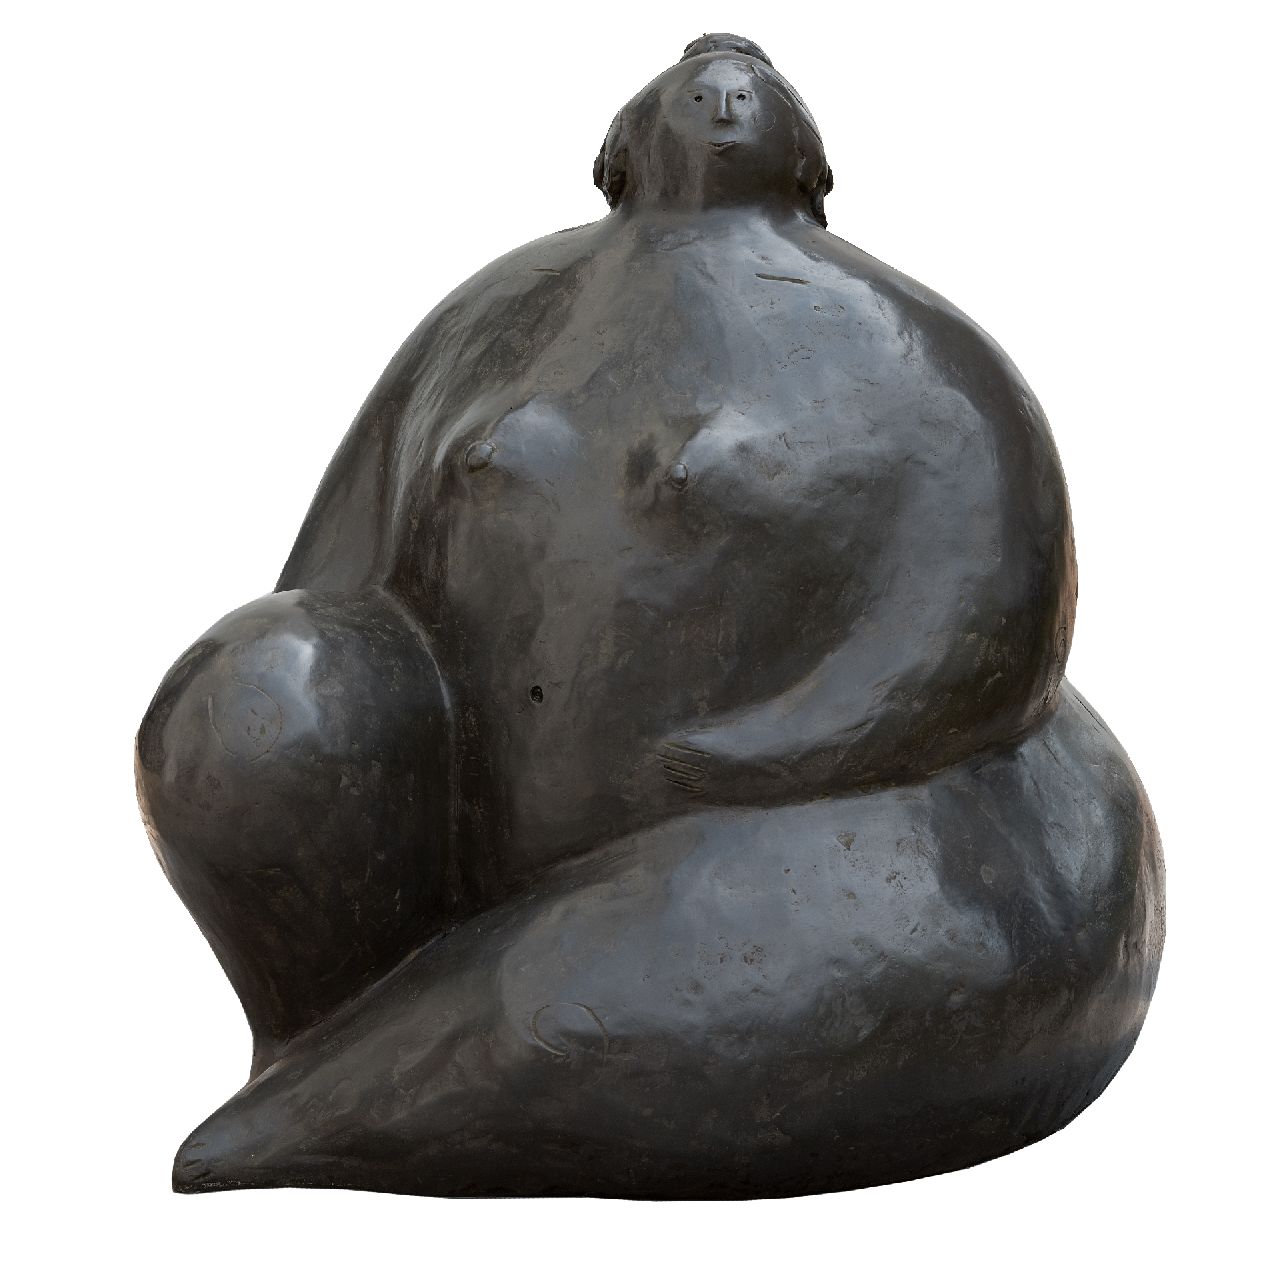 Hemert E. van | Evert van Hemert, Saskia, patinated bronze 65.0 x 55.0 cm, signed with monogram on the side